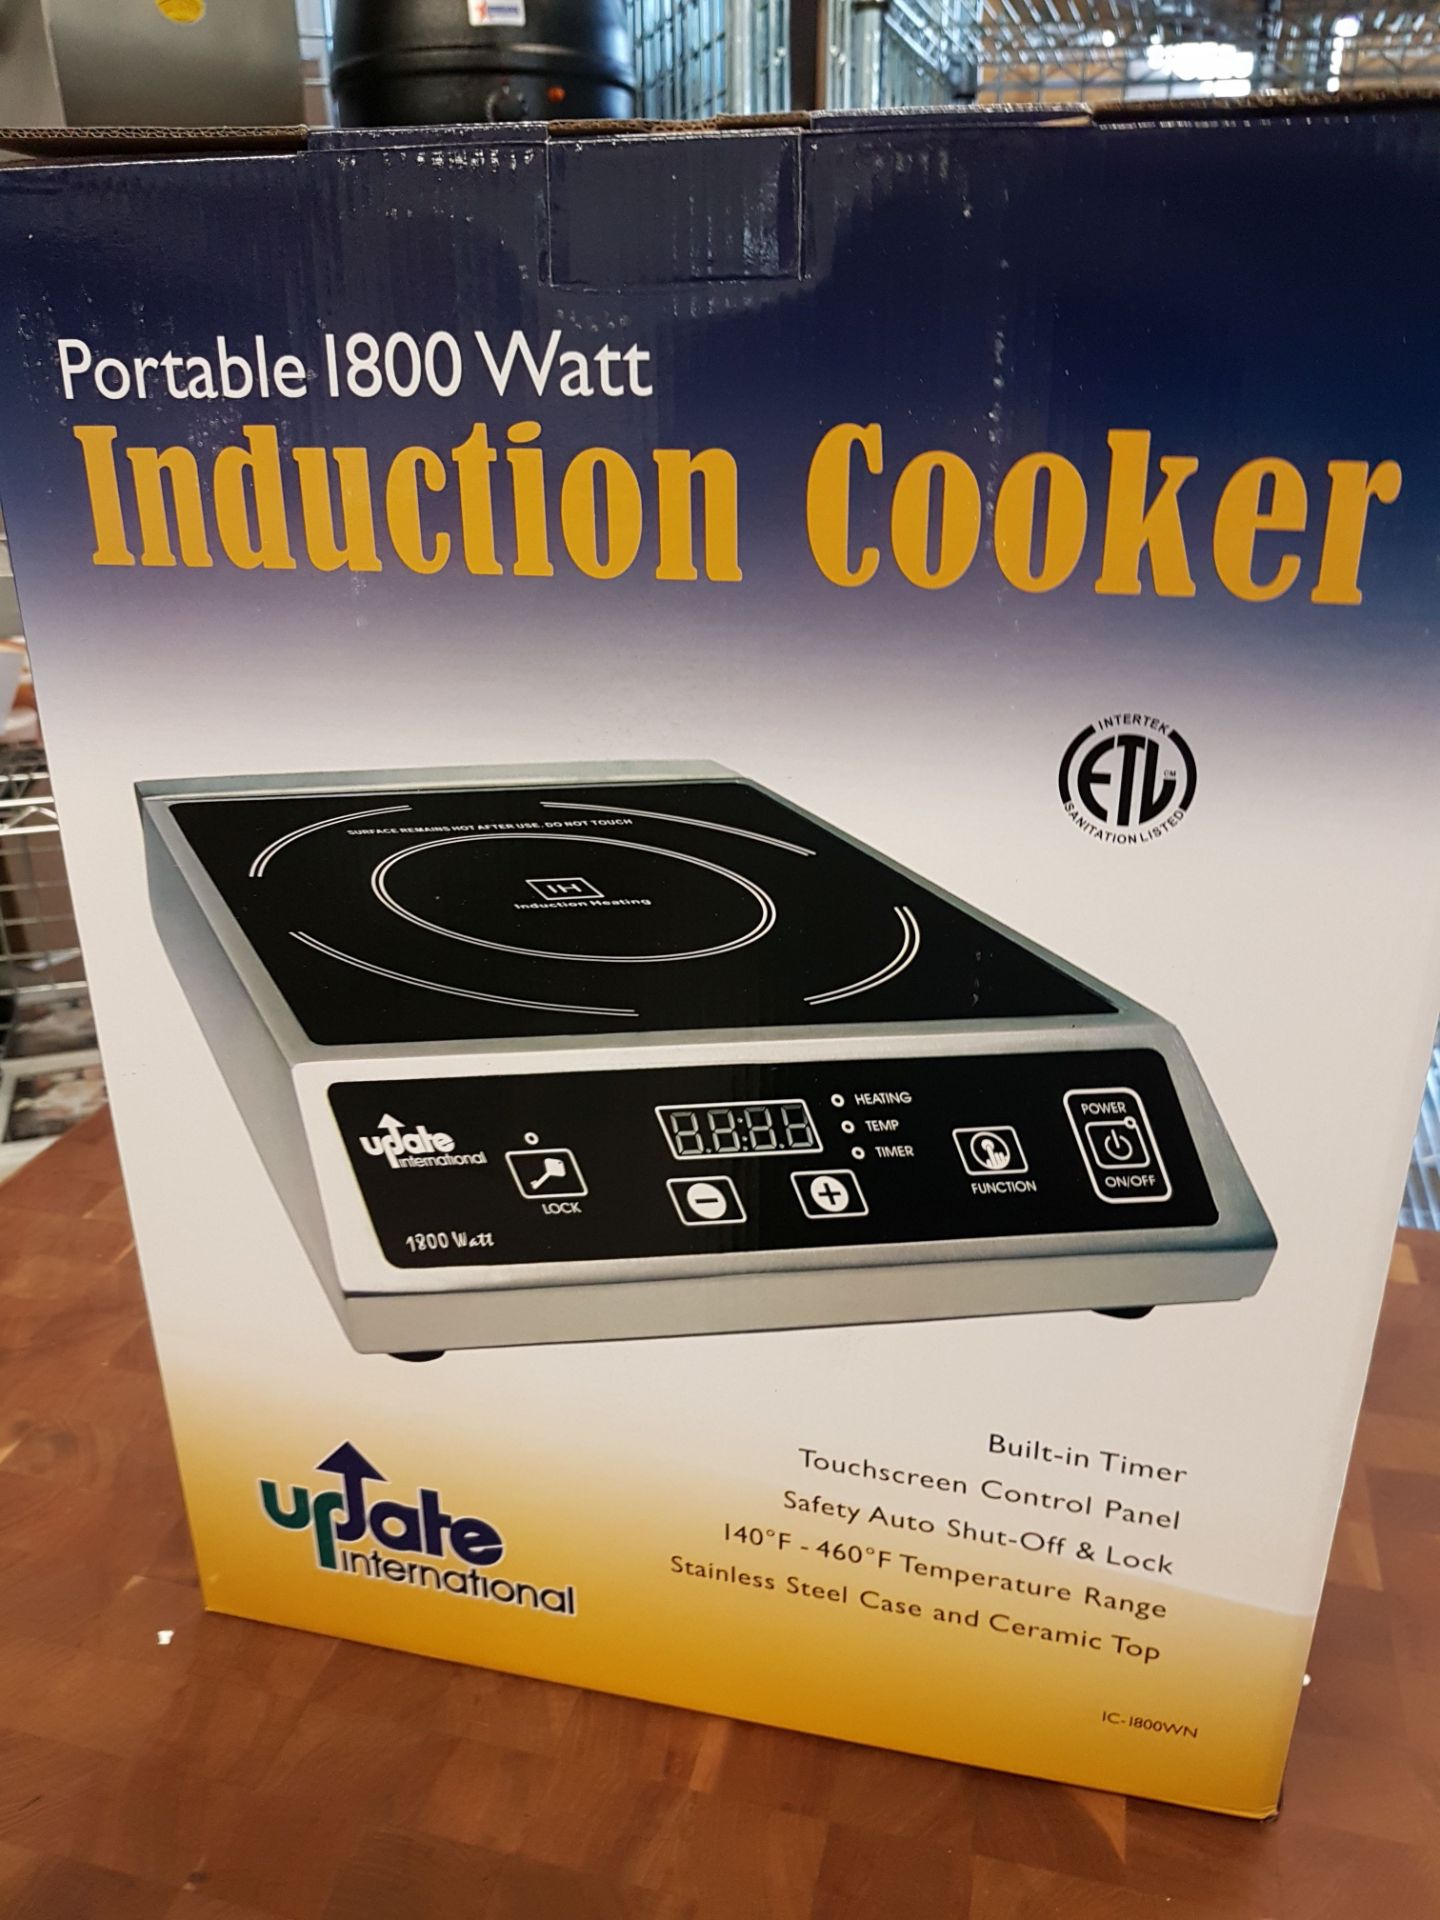 Update 1800 Watt Portable Induction Cooker - Model IC-1800WN